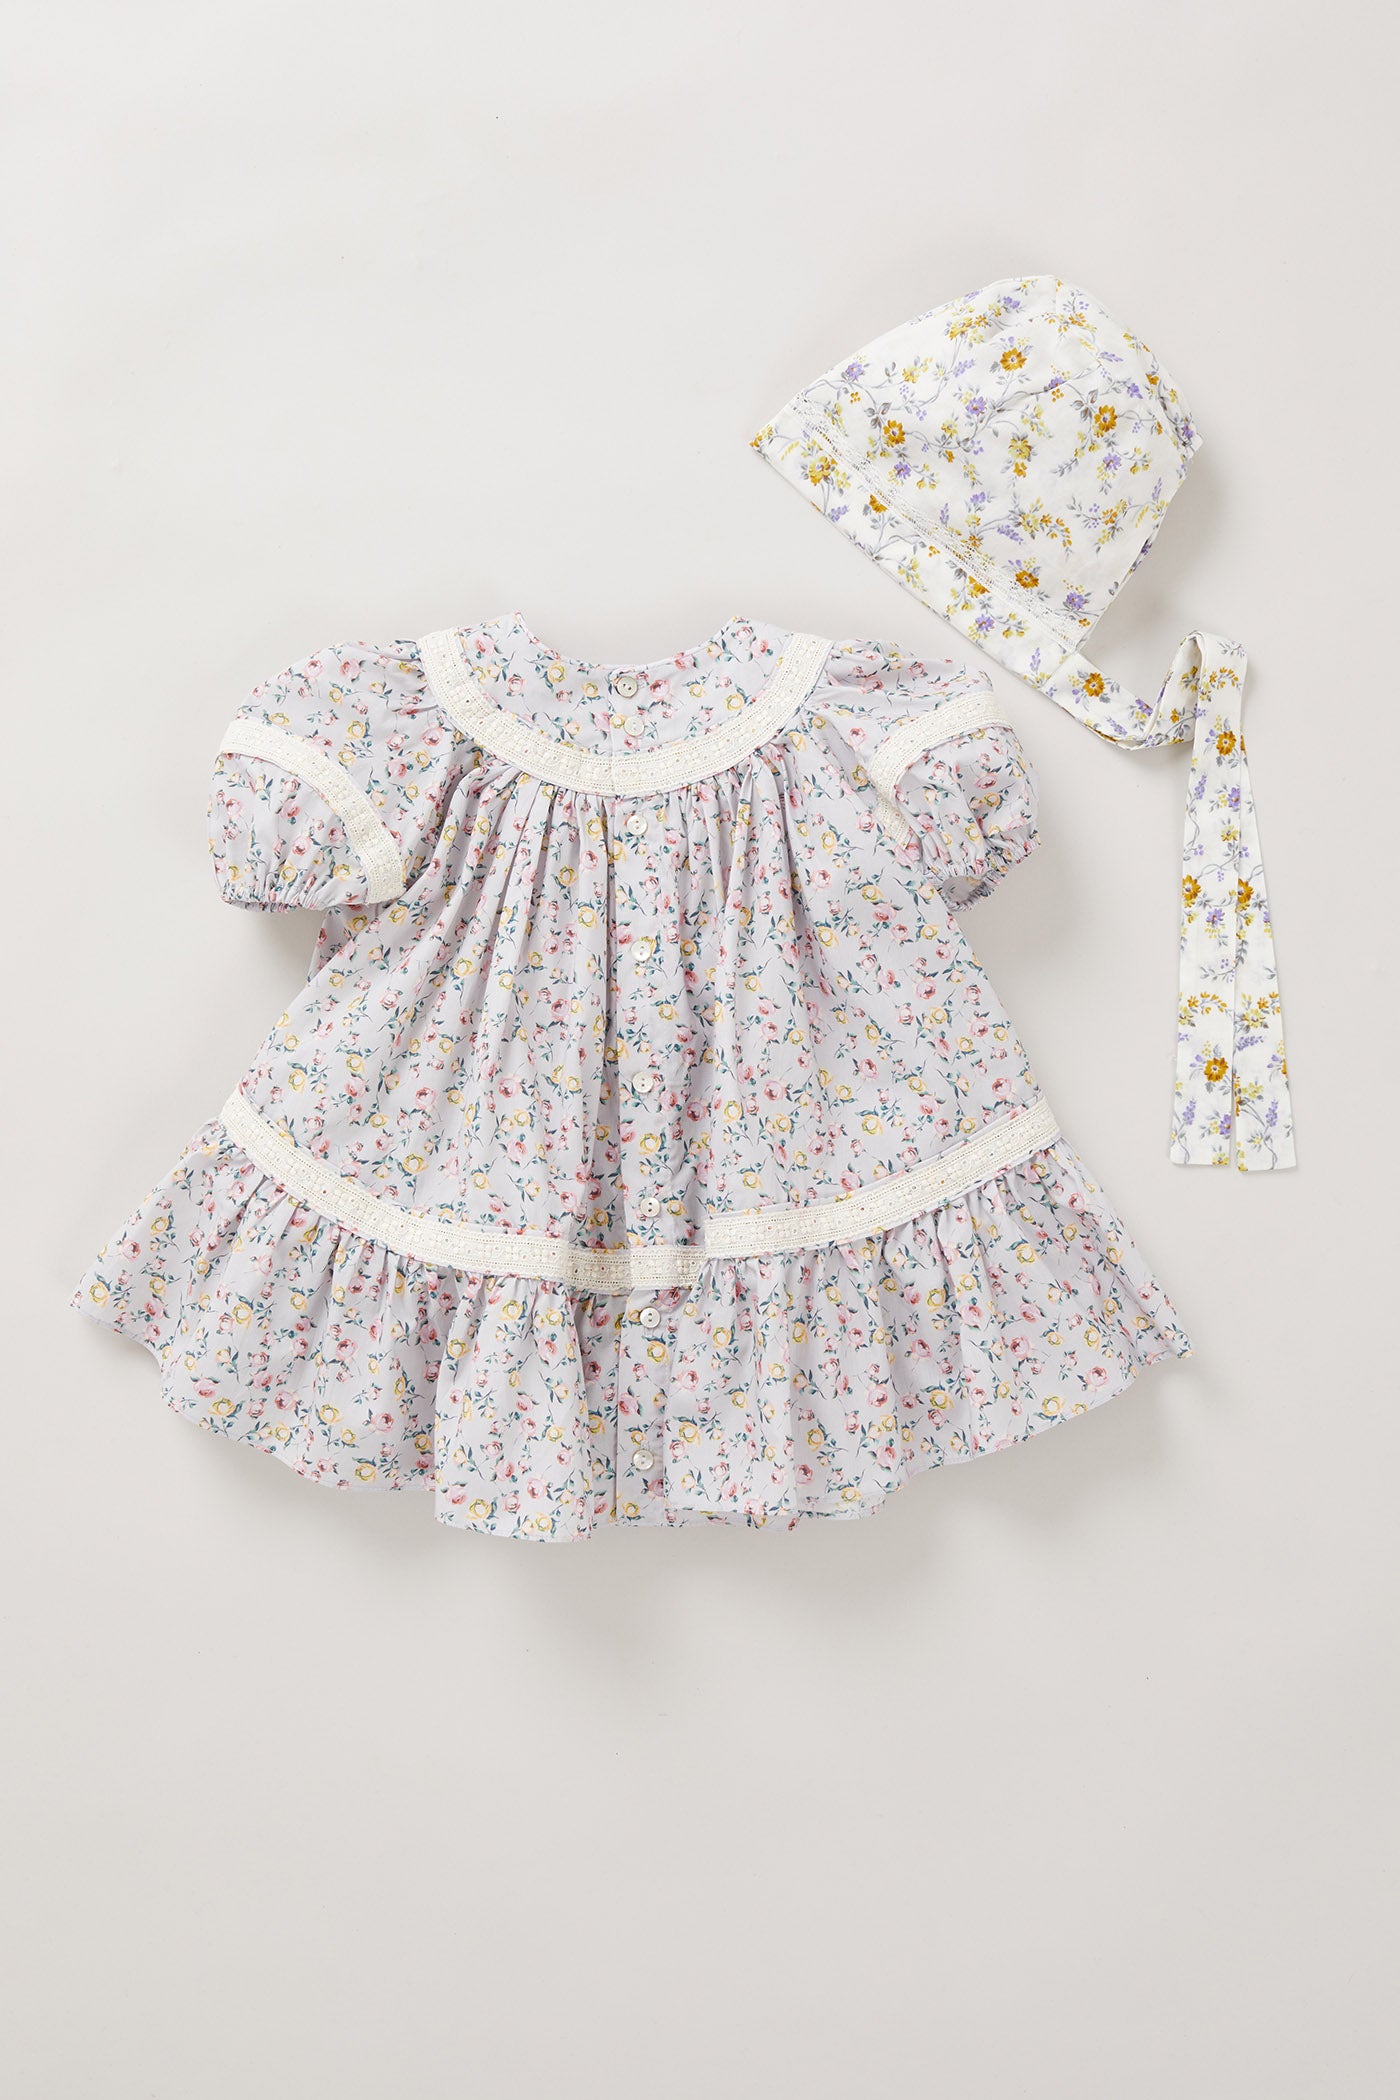 Baby Plumcake Dress in Lavender Rose